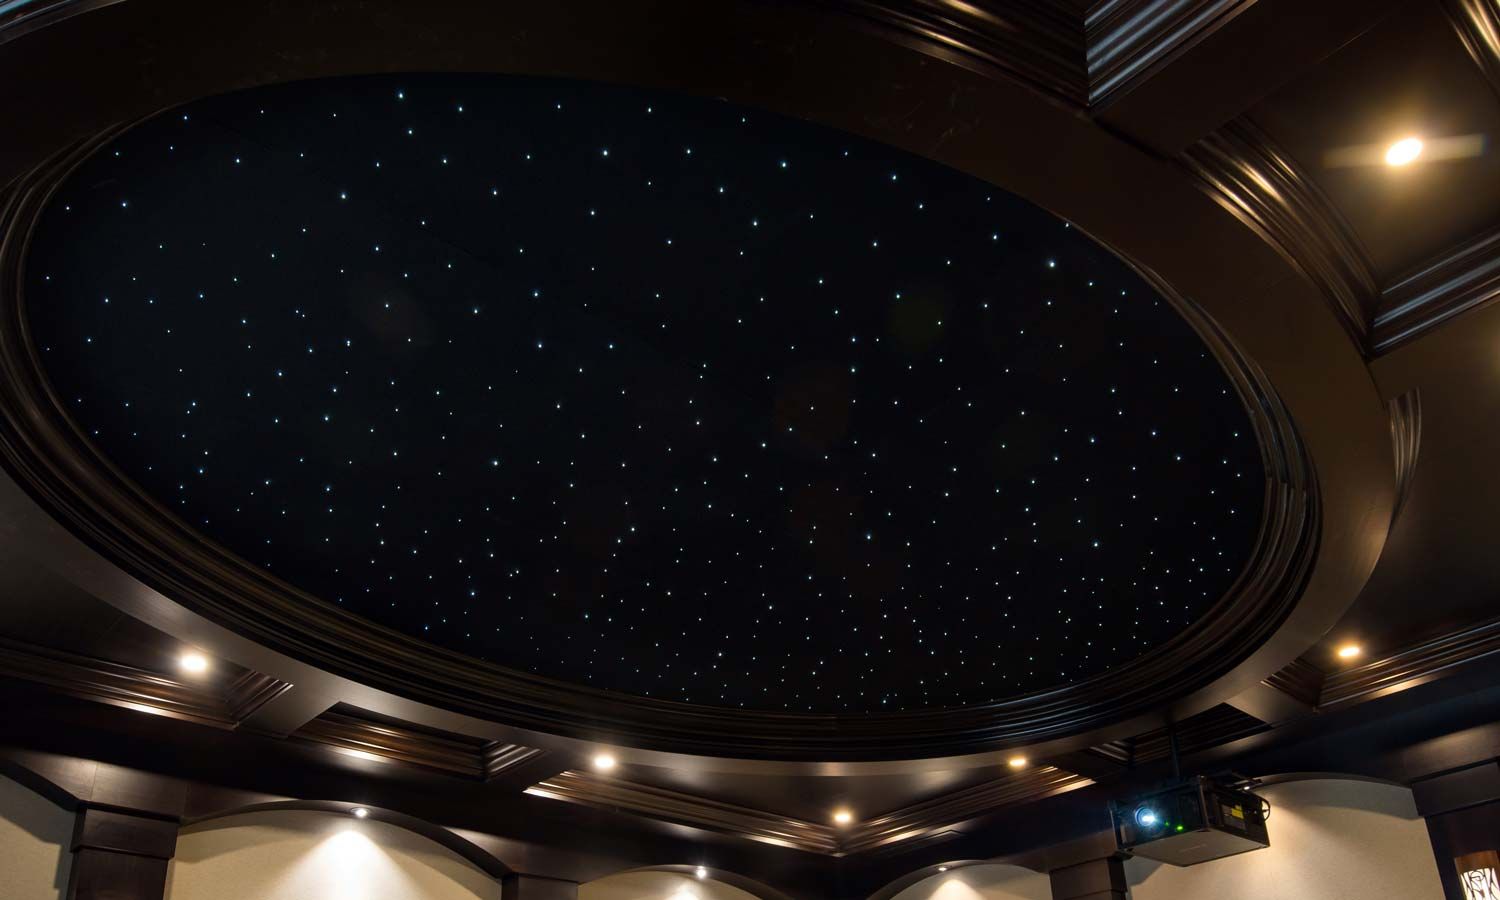 LED lights in ceiling